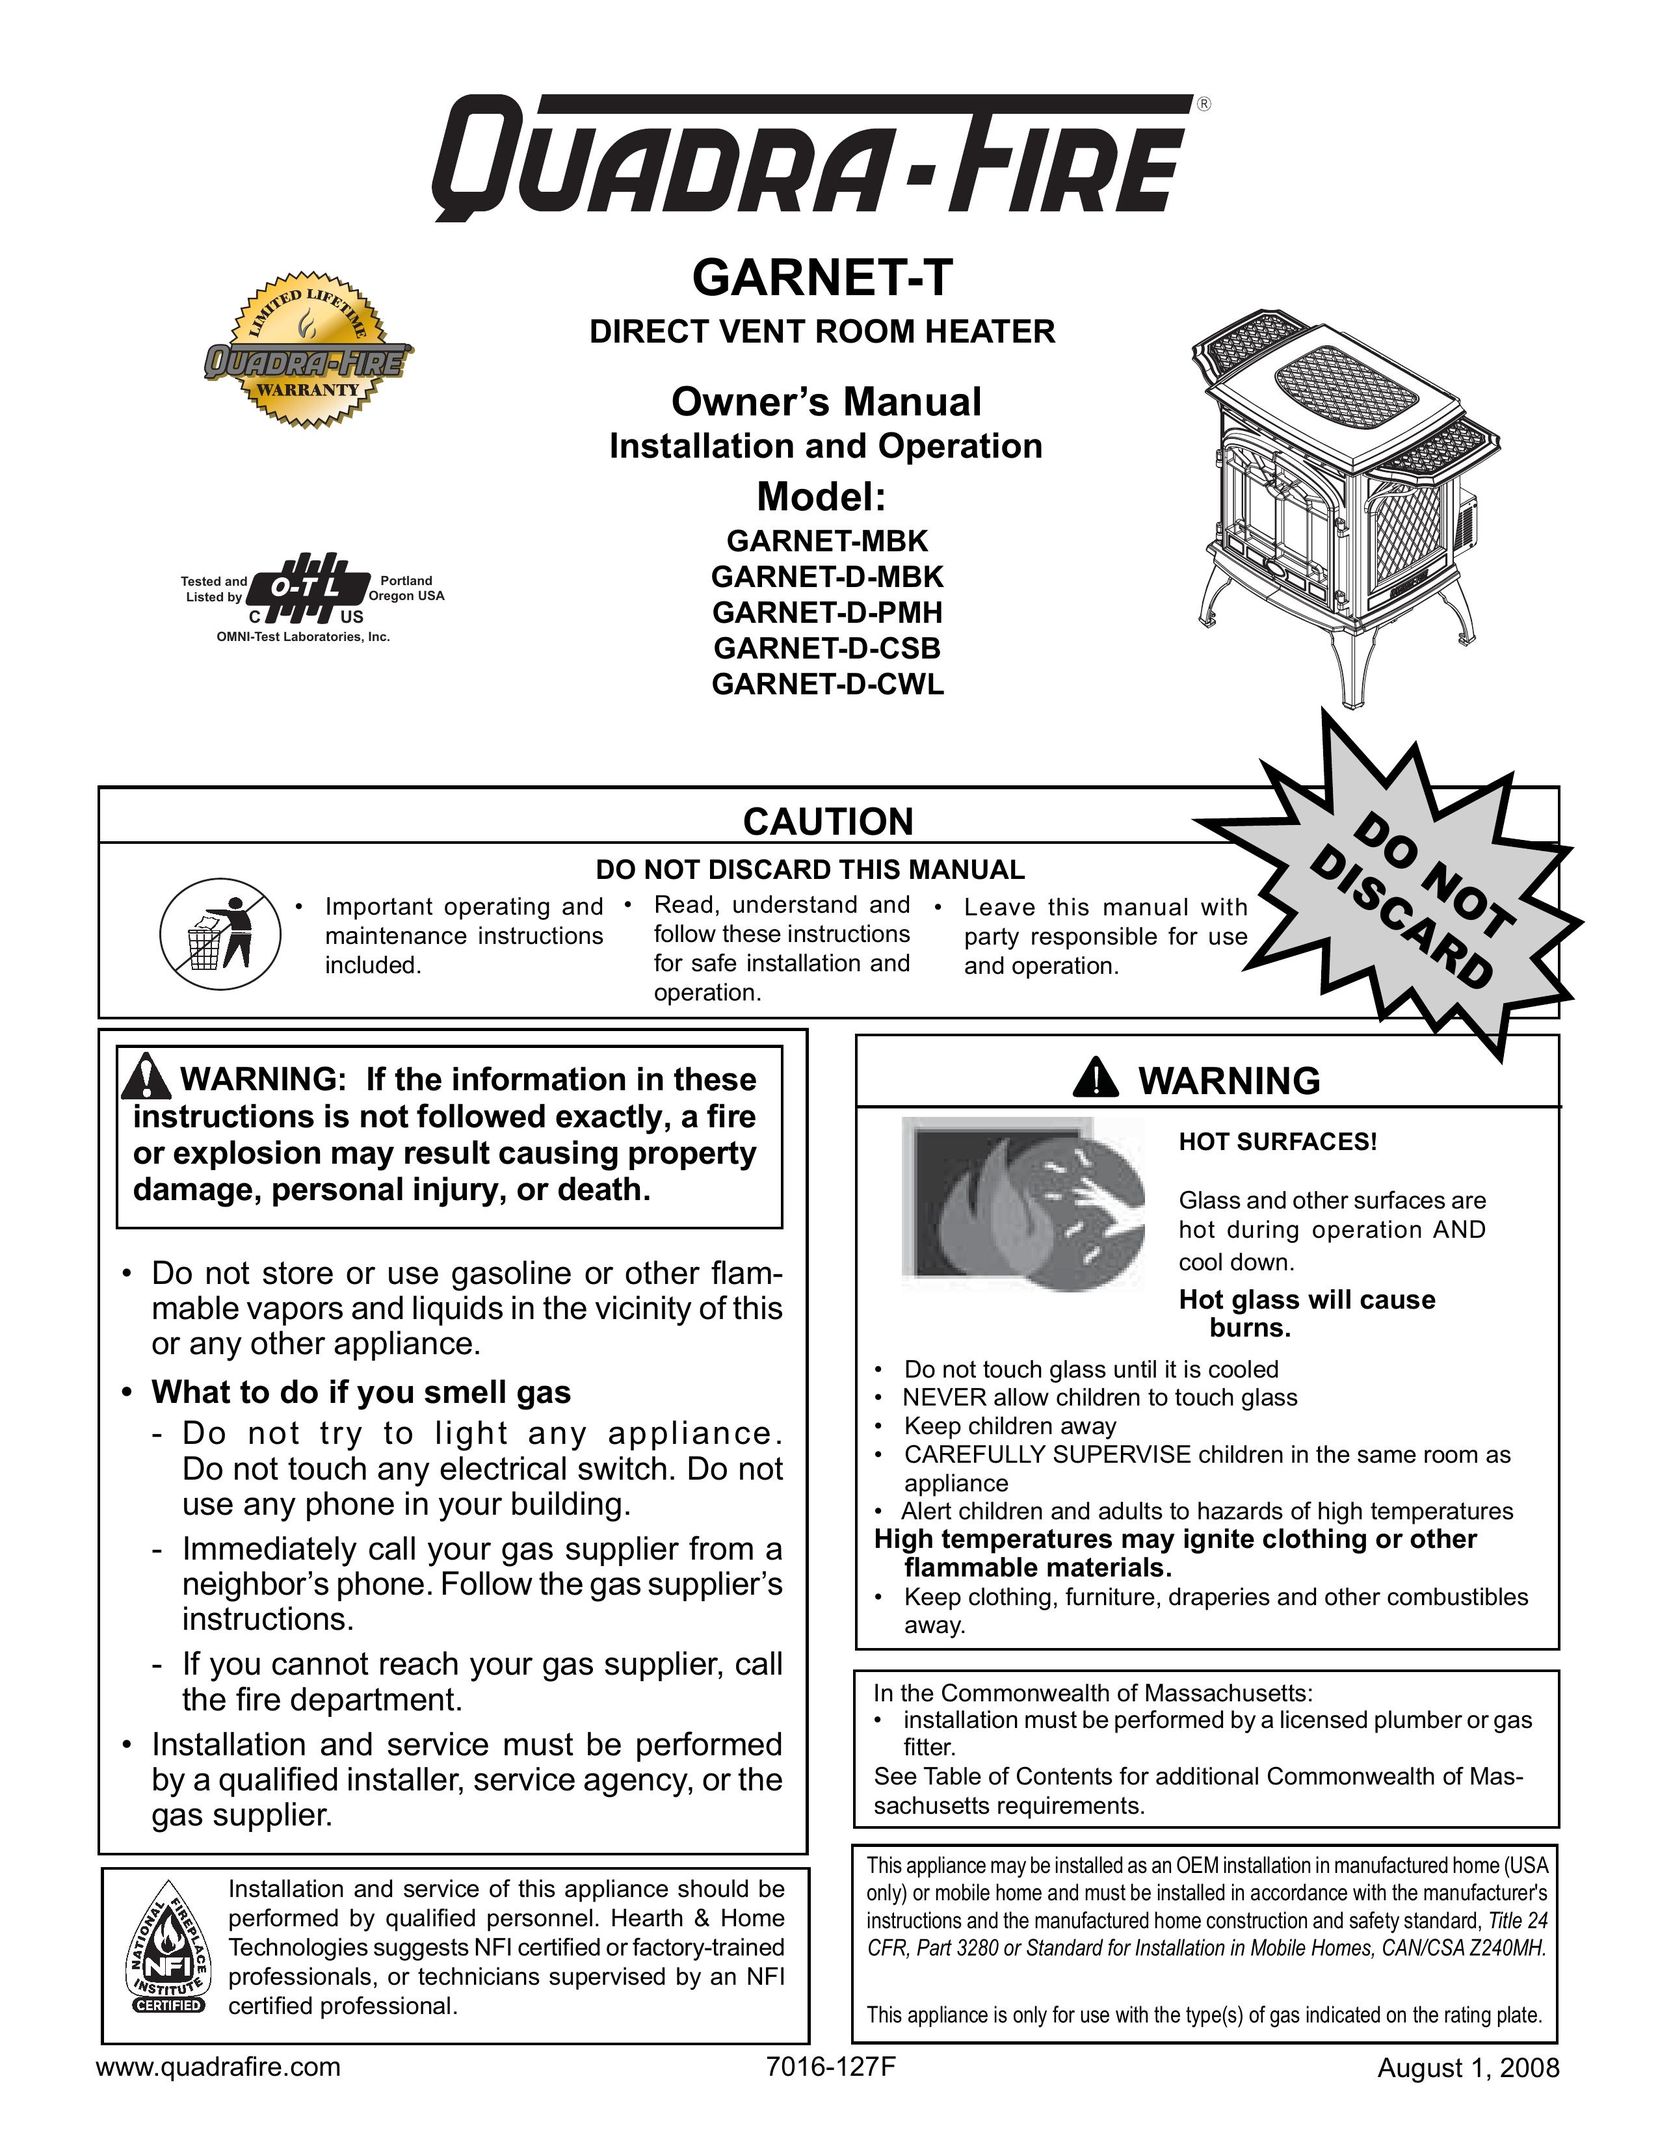 Quadra-Fire GARNET-D-CWL Electric Heater User Manual